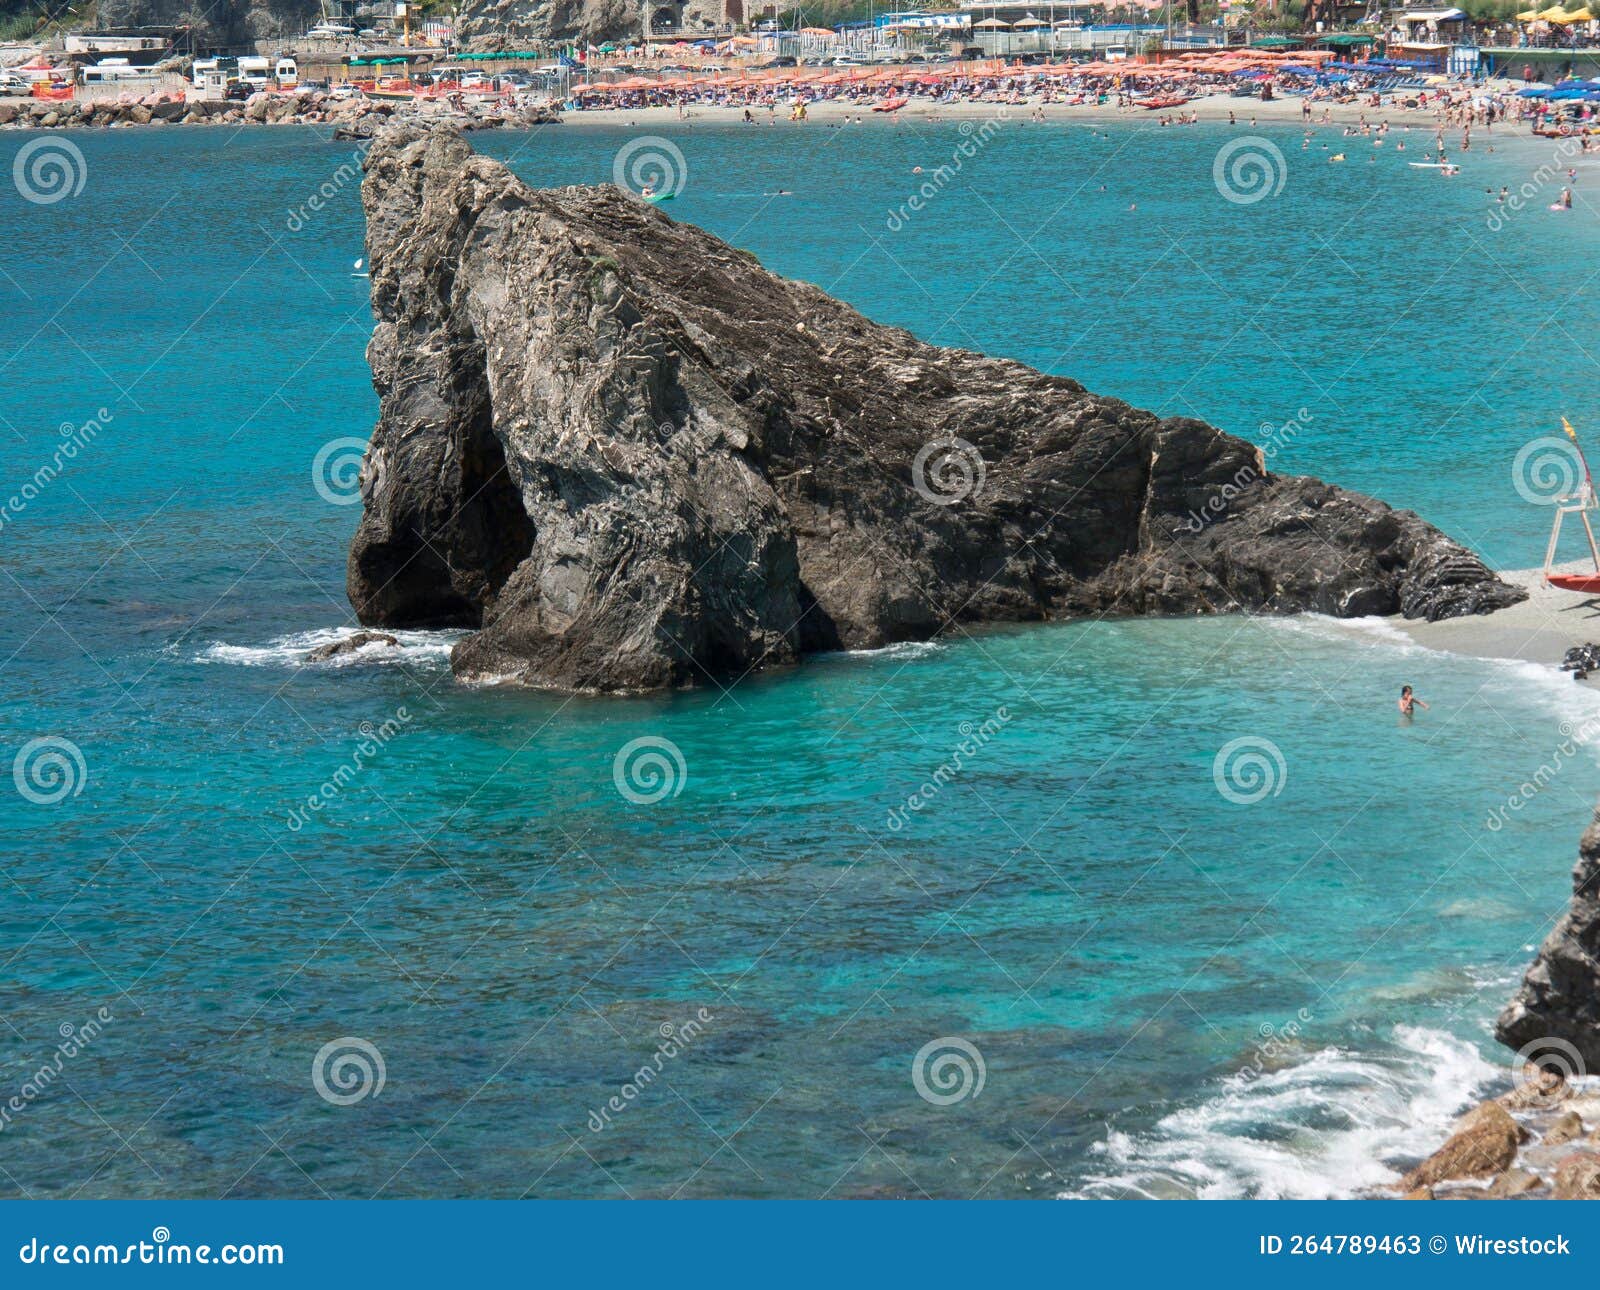 Big Rock Near the Beach on the Mediterranean Sea Stock Image - Image of ...